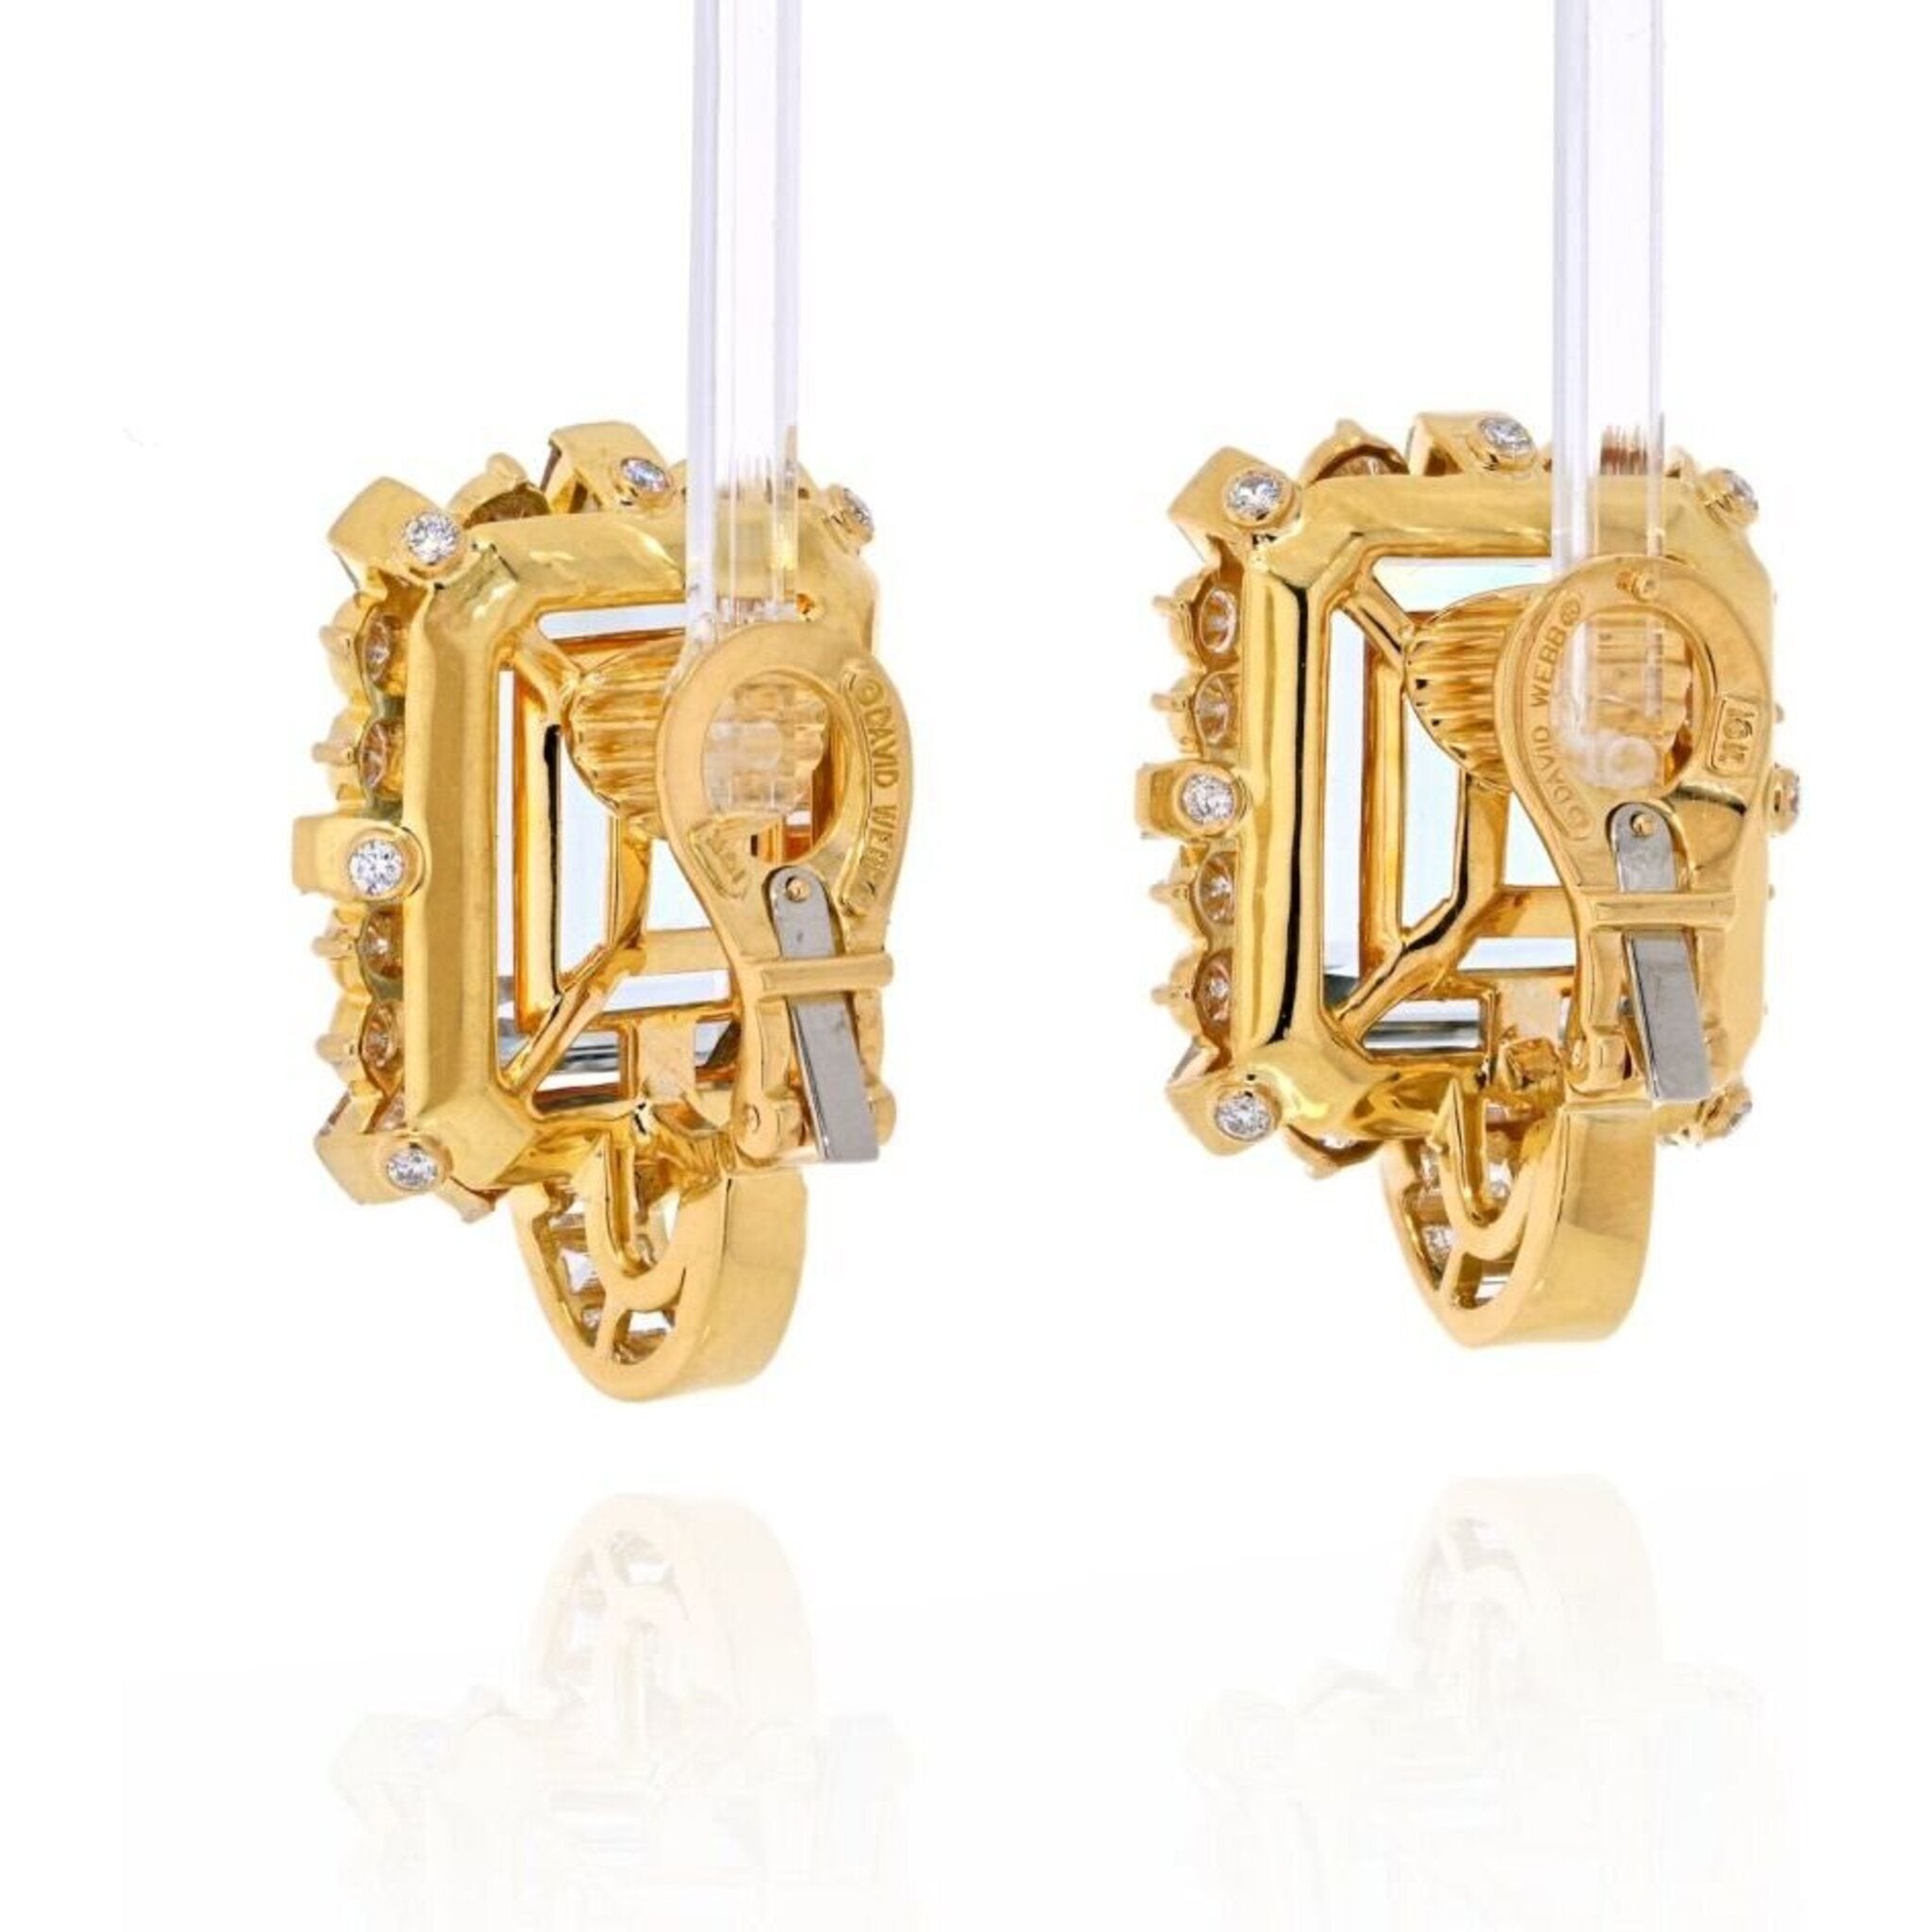 David Webb - 18K Yellow Gold Diamond & Aquamarine Square Shaped Earrings